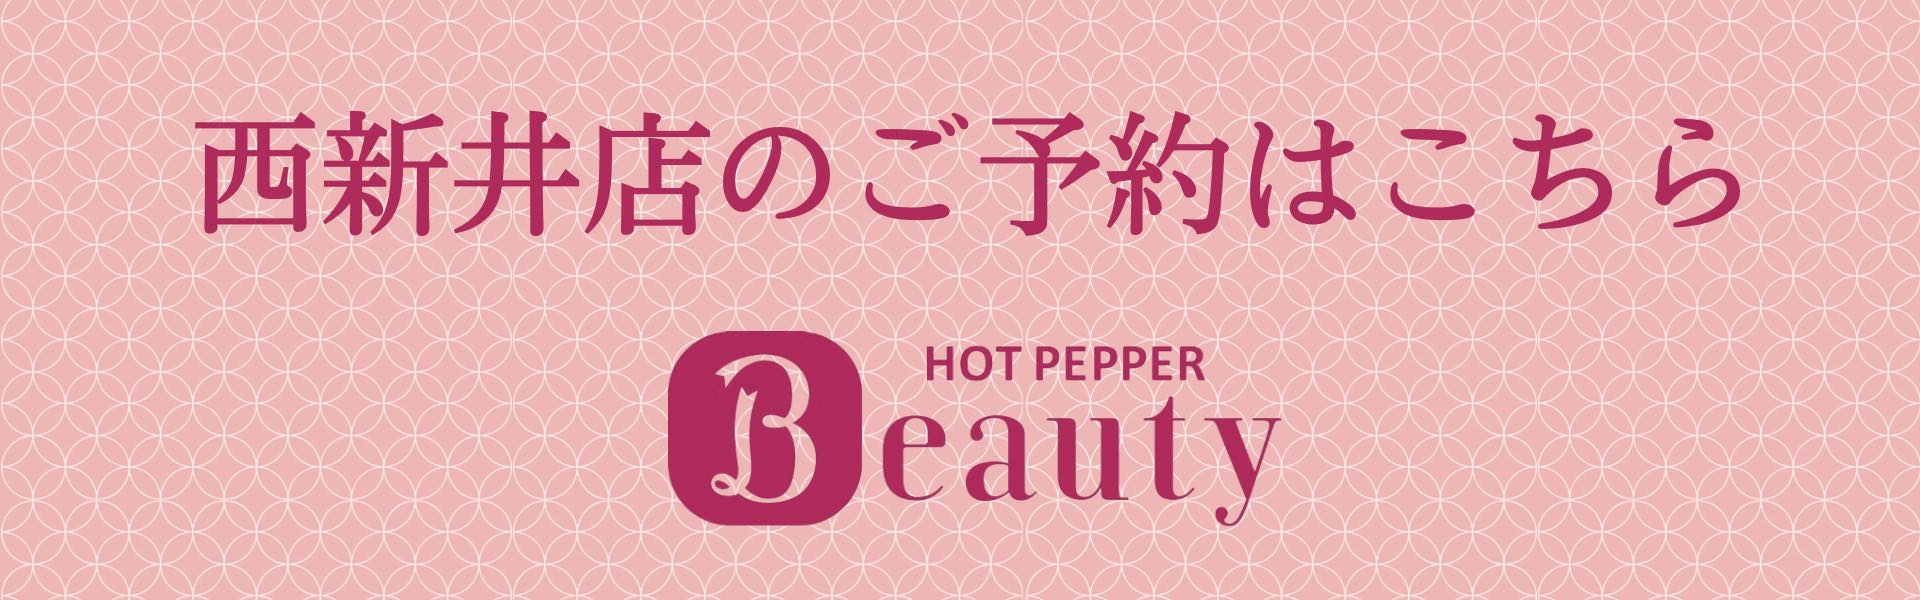 HotPepperBeauty西新井店バナー